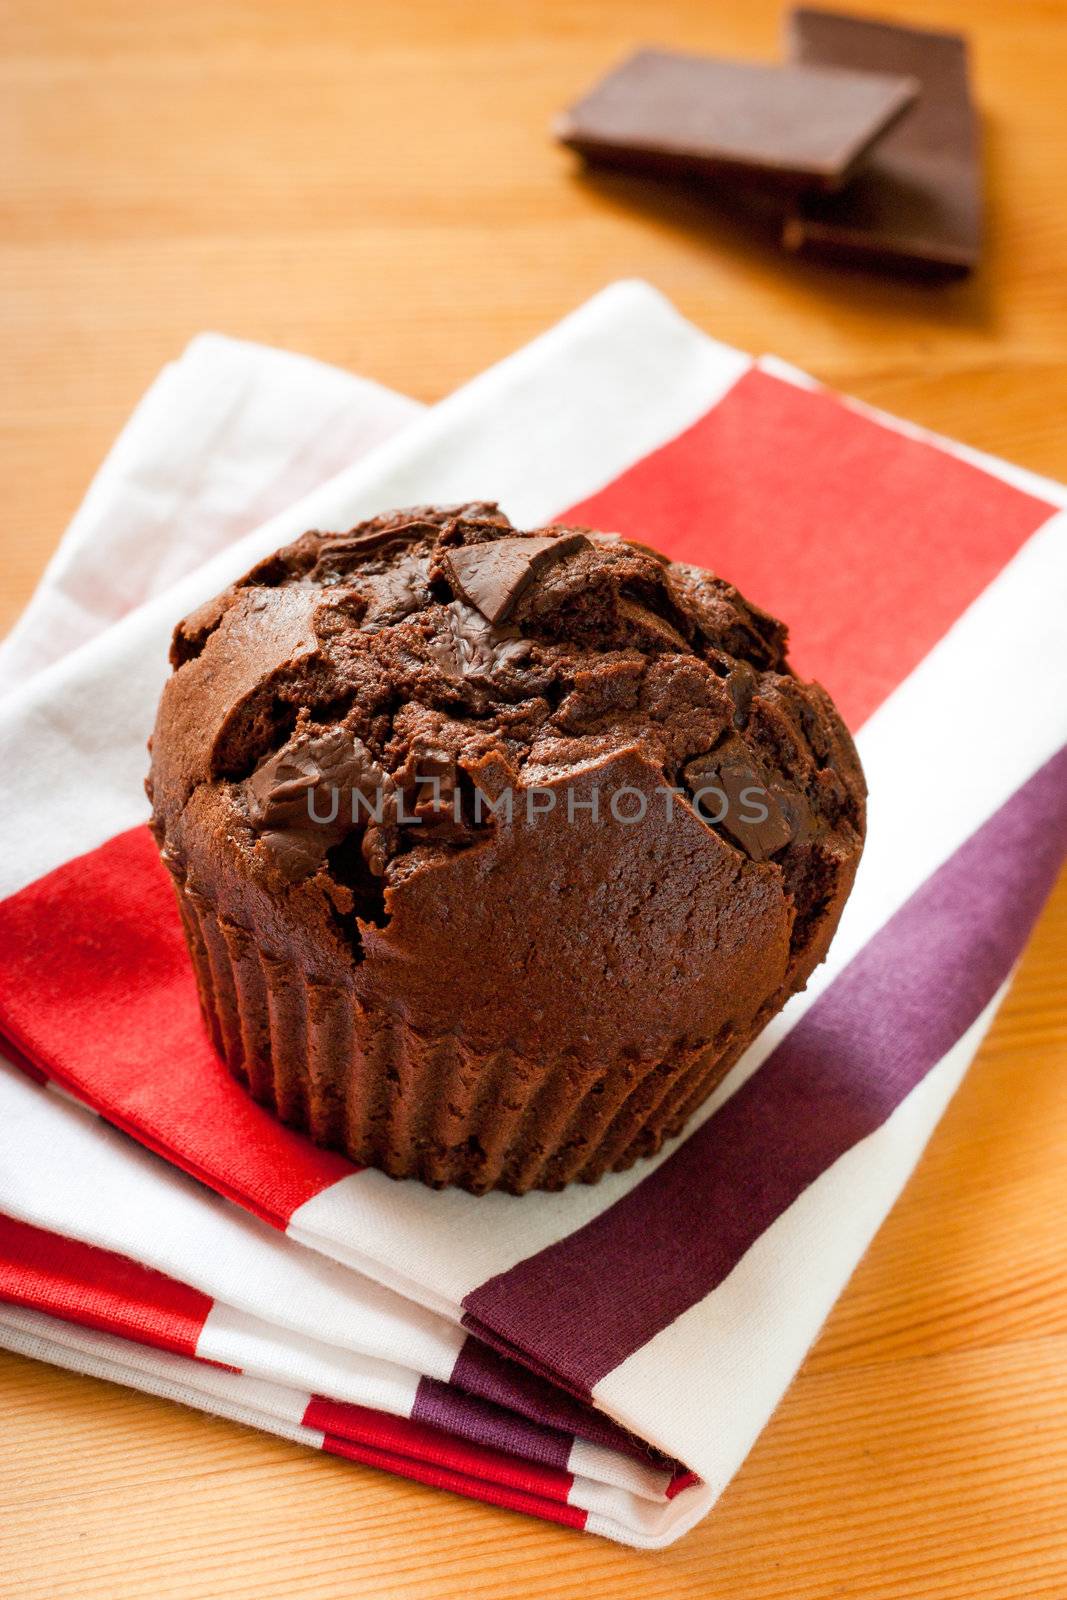 Chocolate muffins with dark chocolate chips